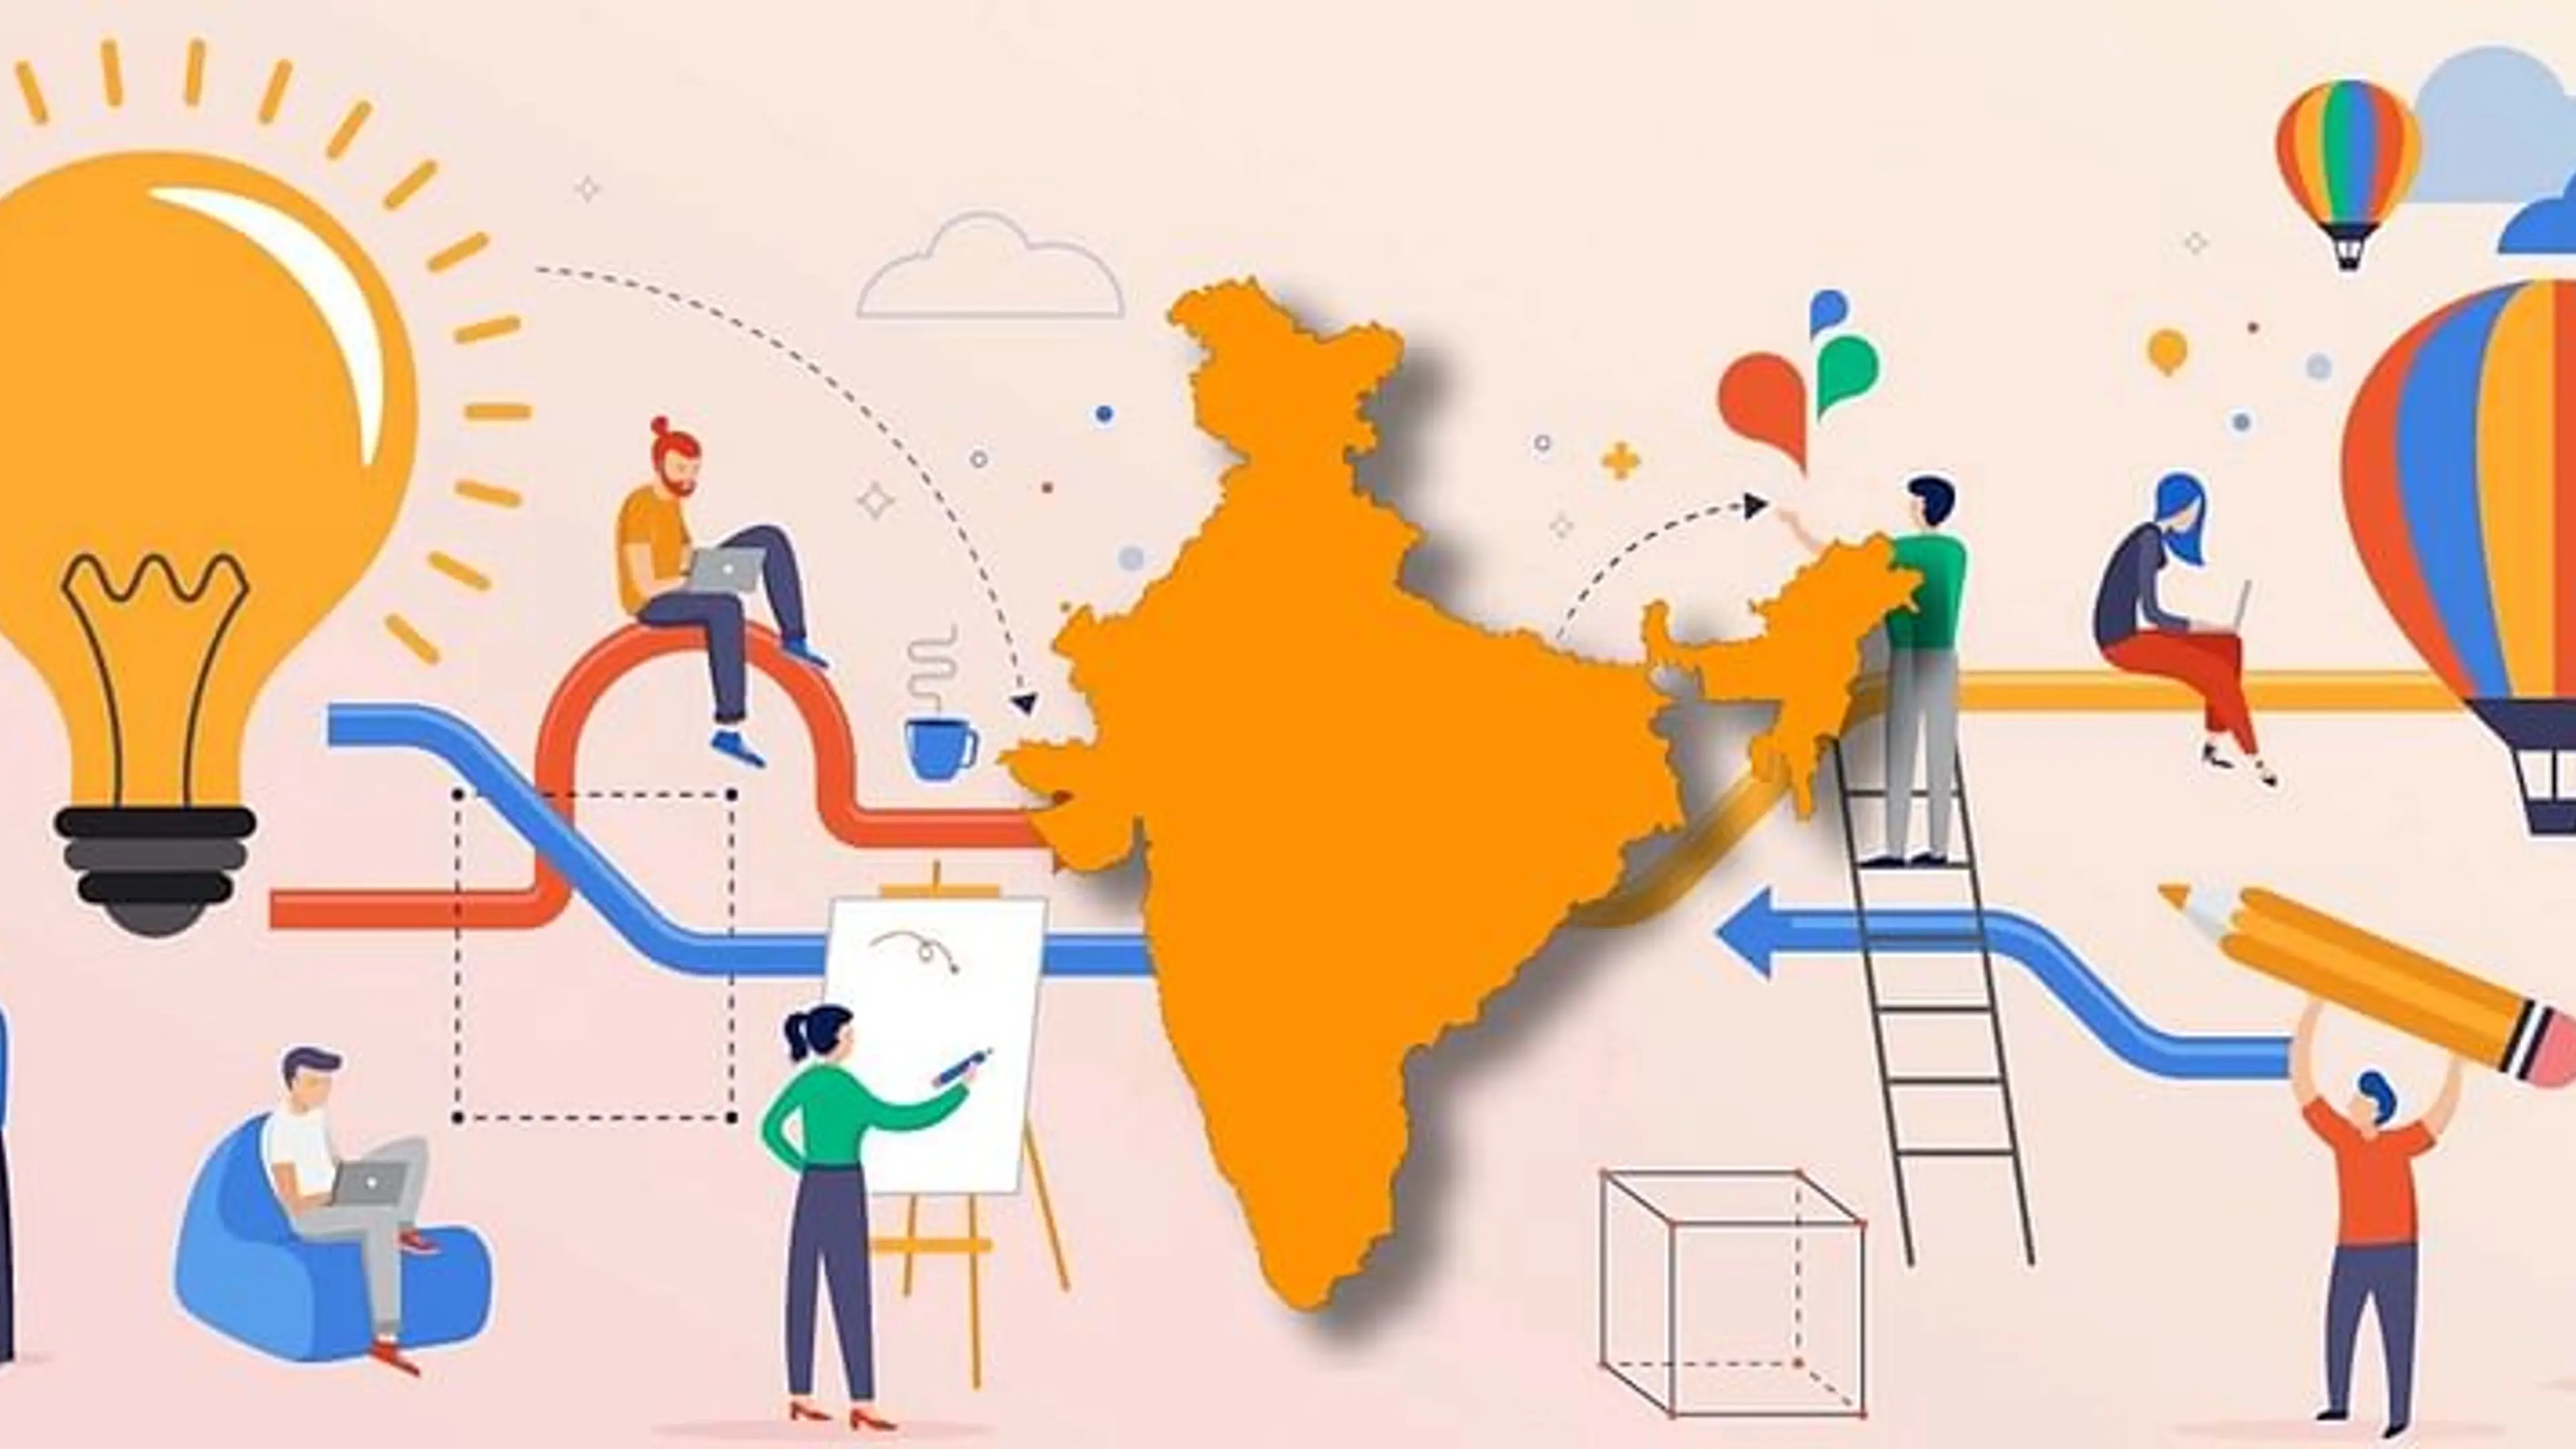 Indian startup ecosystem is mature, set to bolster Indian economy: AWS' Kumara Raghavan